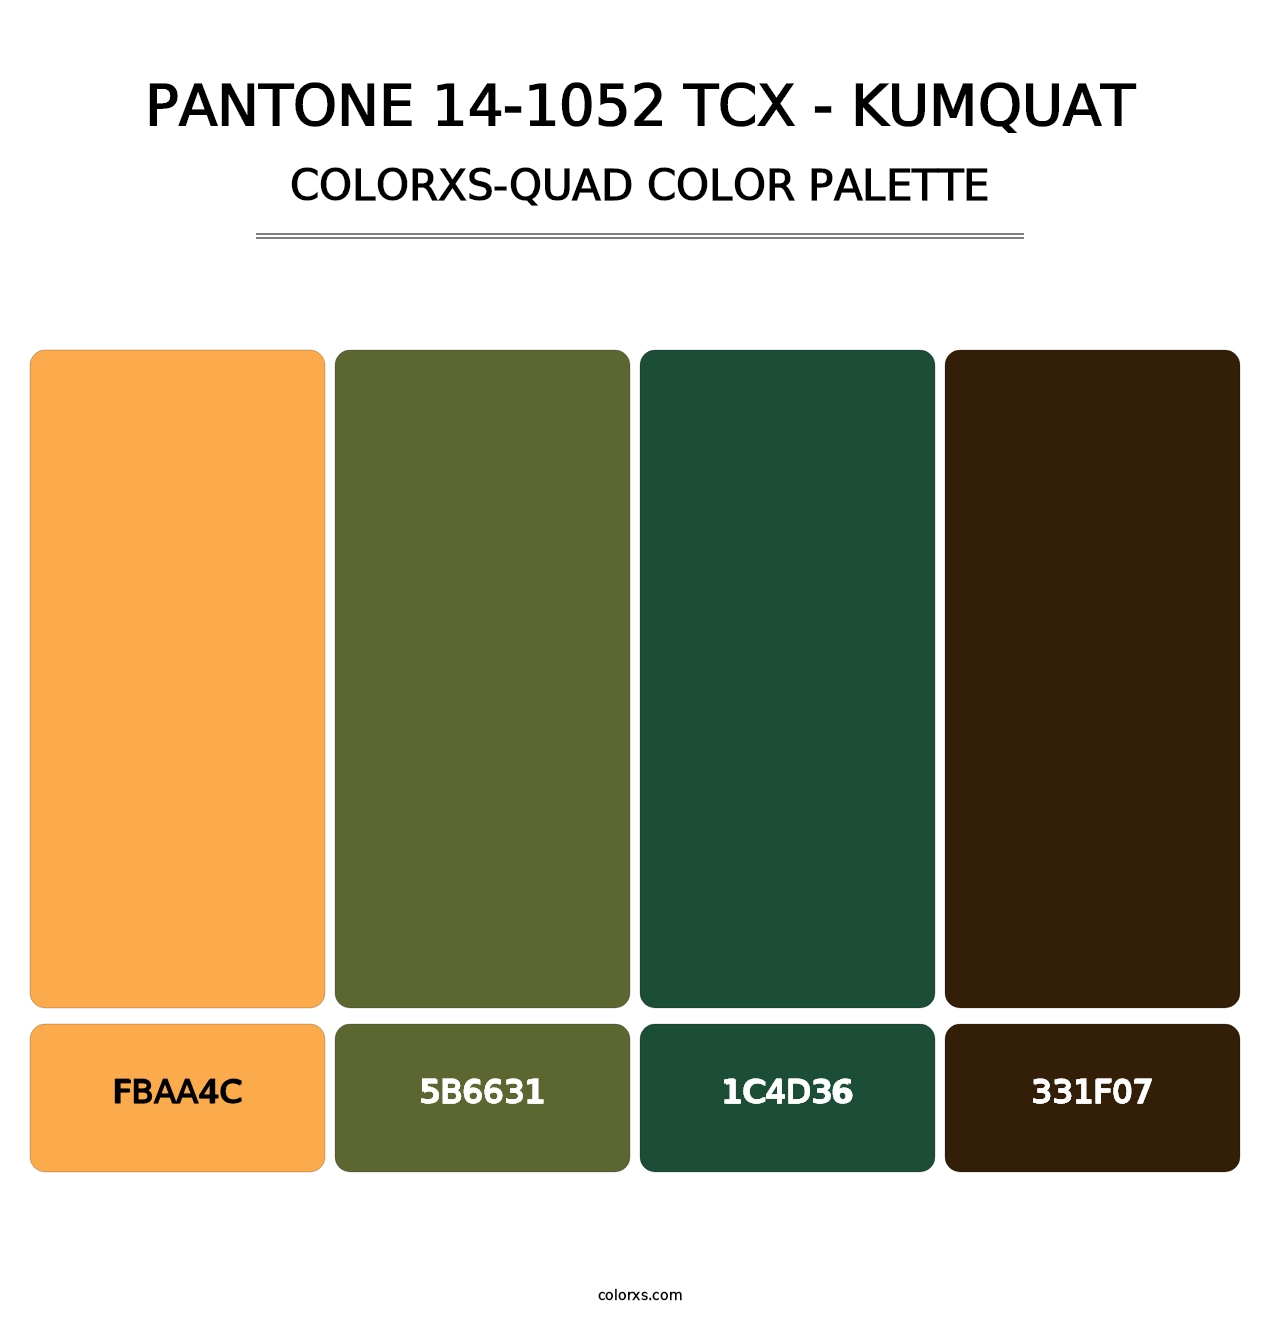 PANTONE 14-1052 TCX - Kumquat - Colorxs Quad Palette